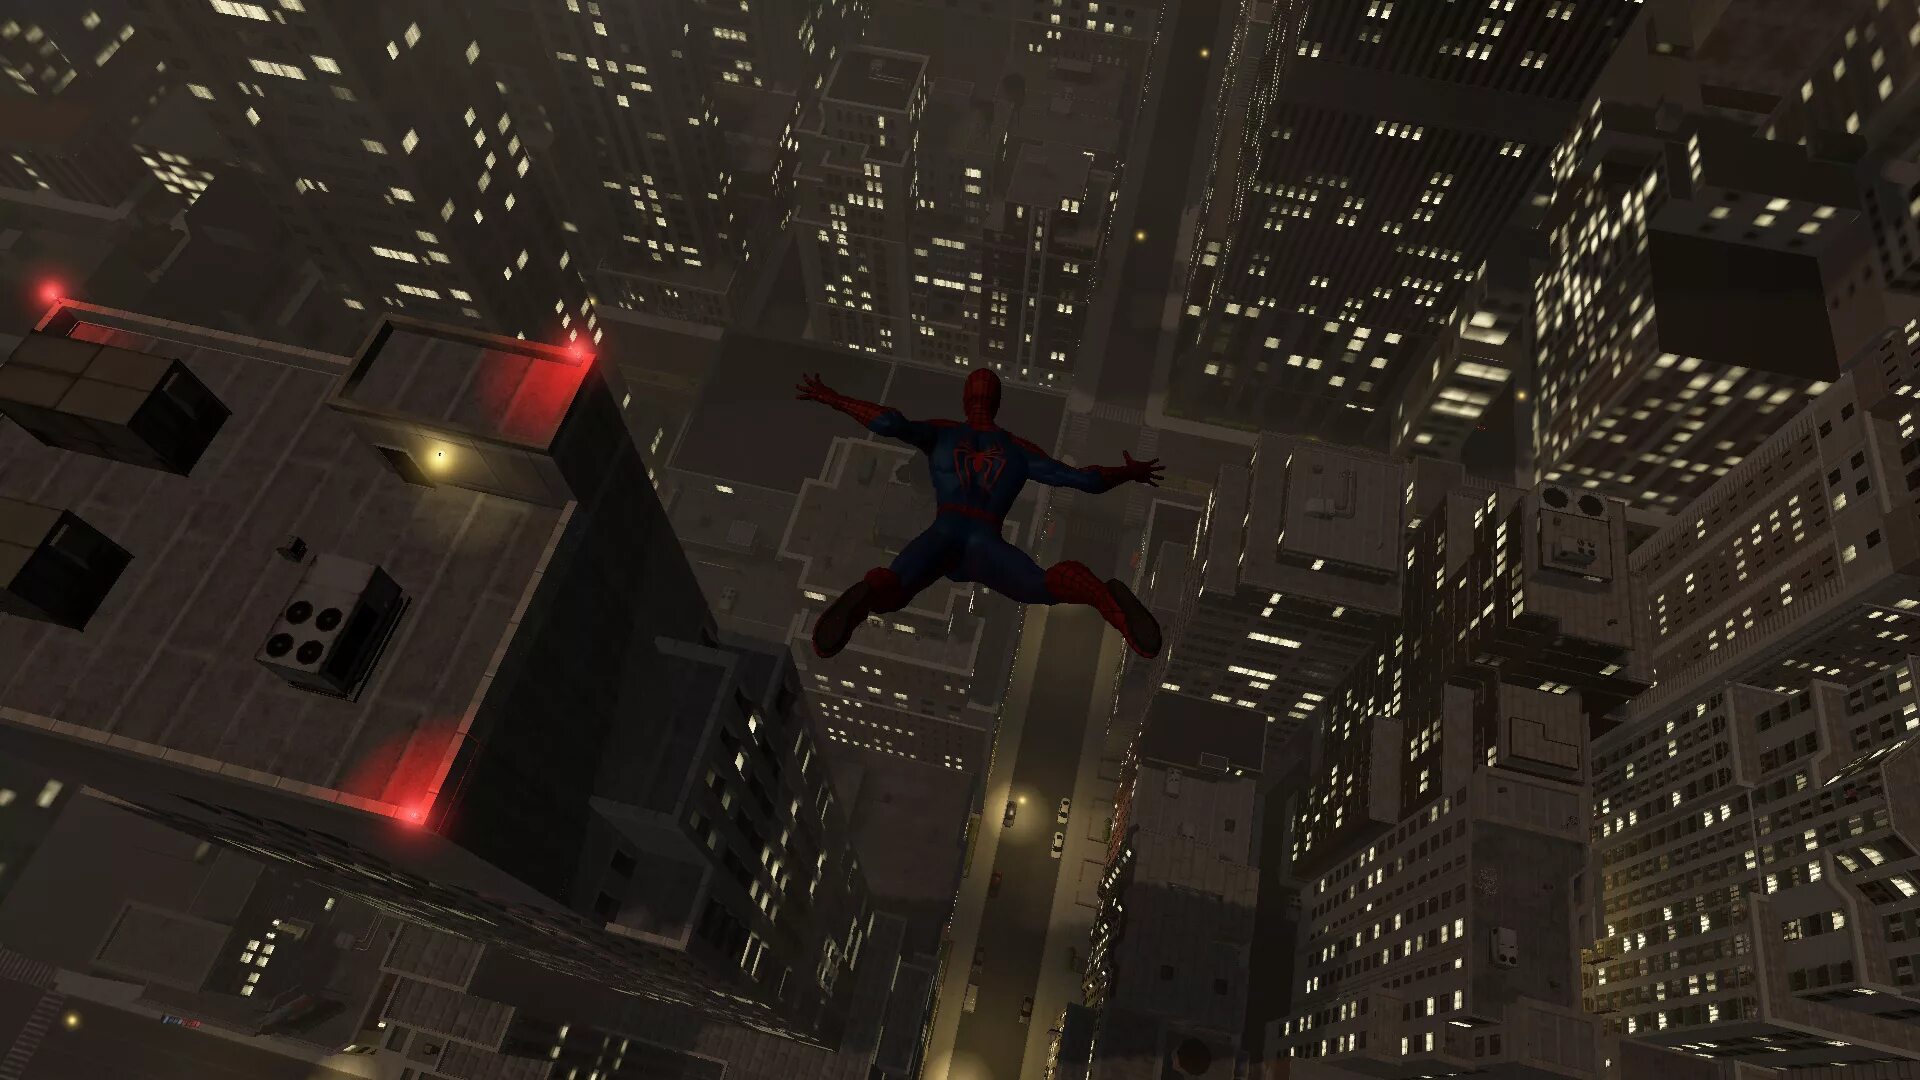 Spider man 2014 игра. The amazing Spider-man (игра, 2012). The amazing Spider-man 2 игра. Амазинг Спайдермен 2 игра.